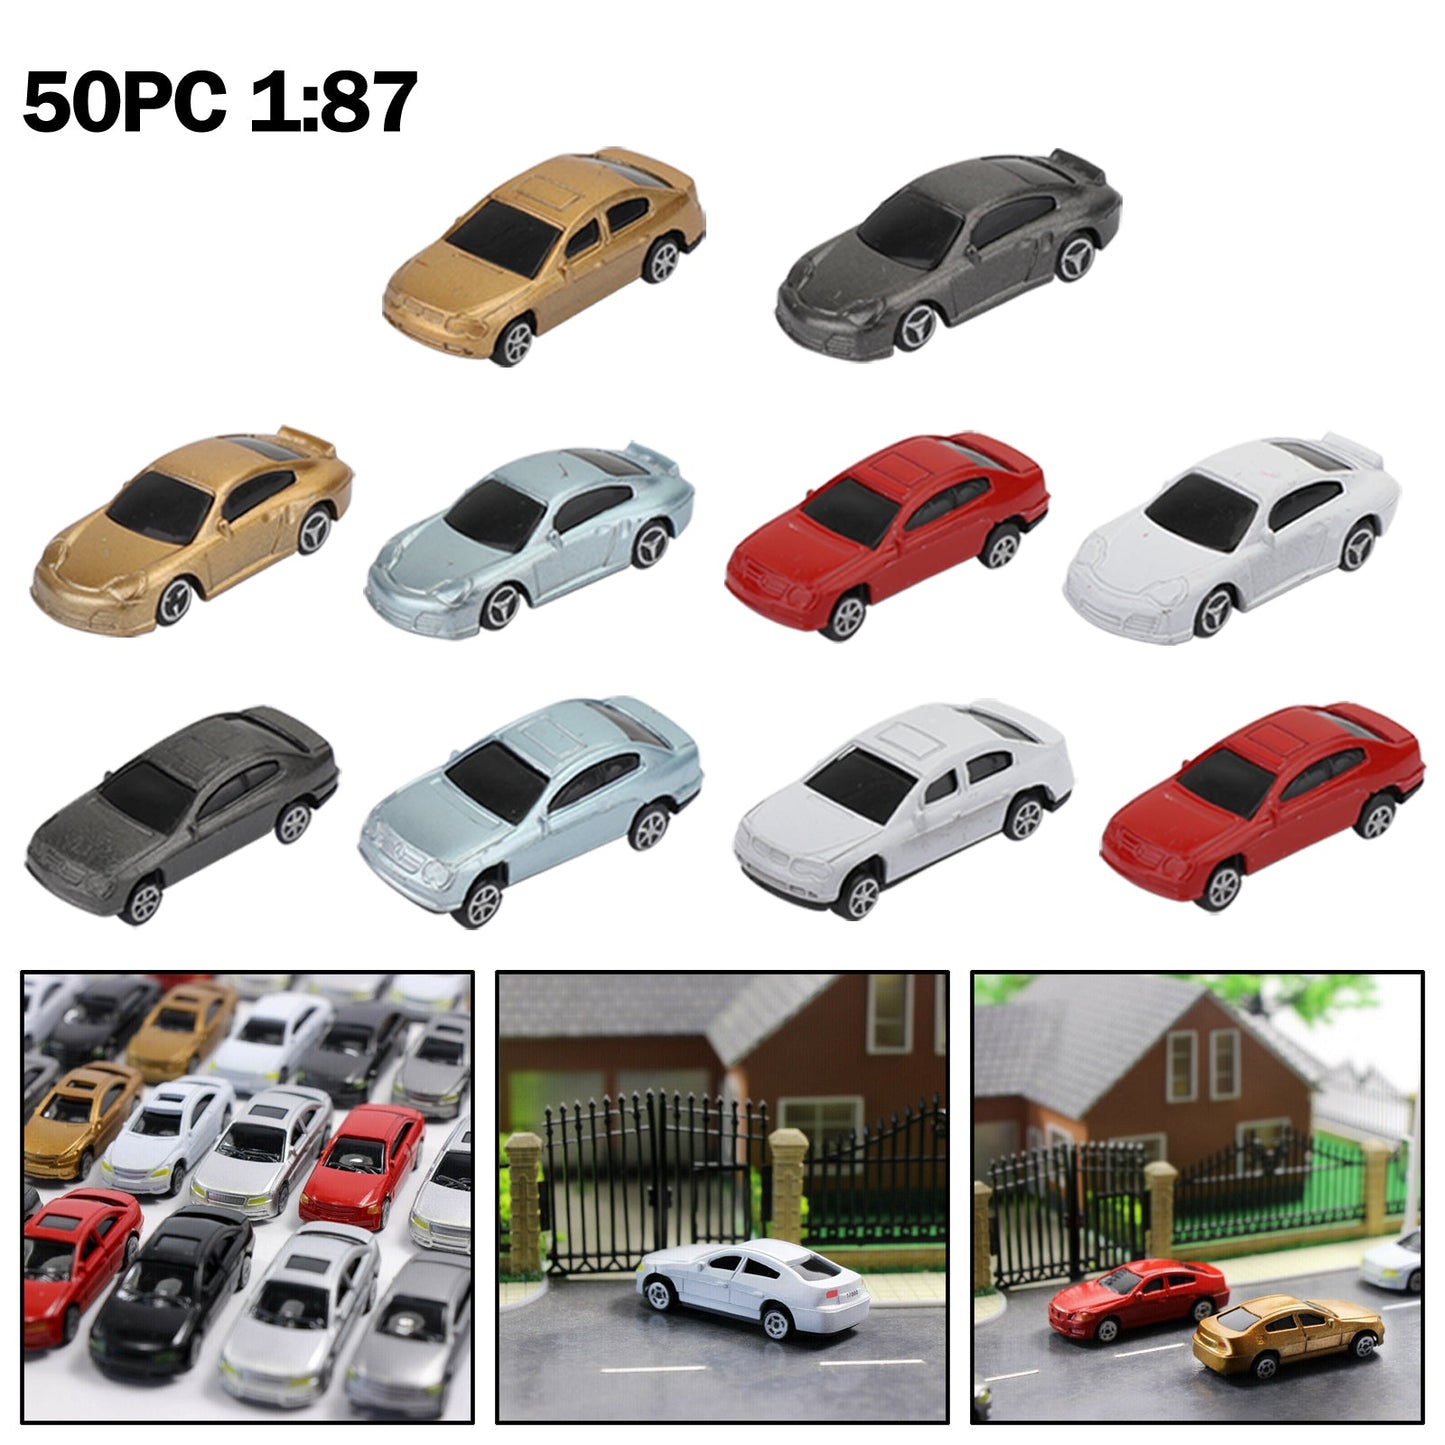 50pcs HO Scale Model Car 1:87 Building Train Scenery Architecture Model